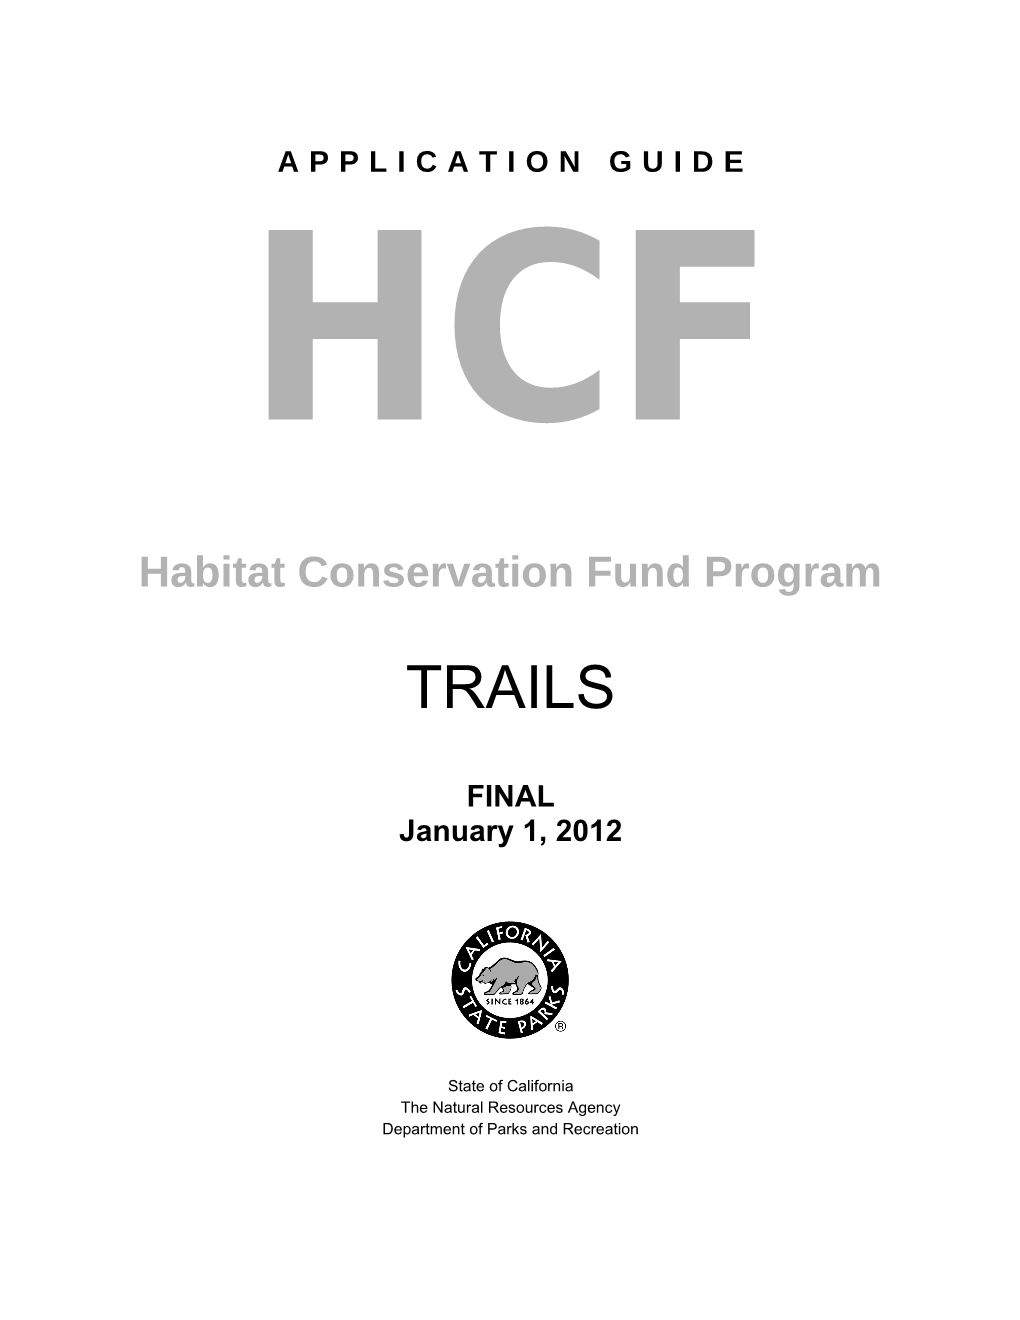 Habitat Conservation Fund Program